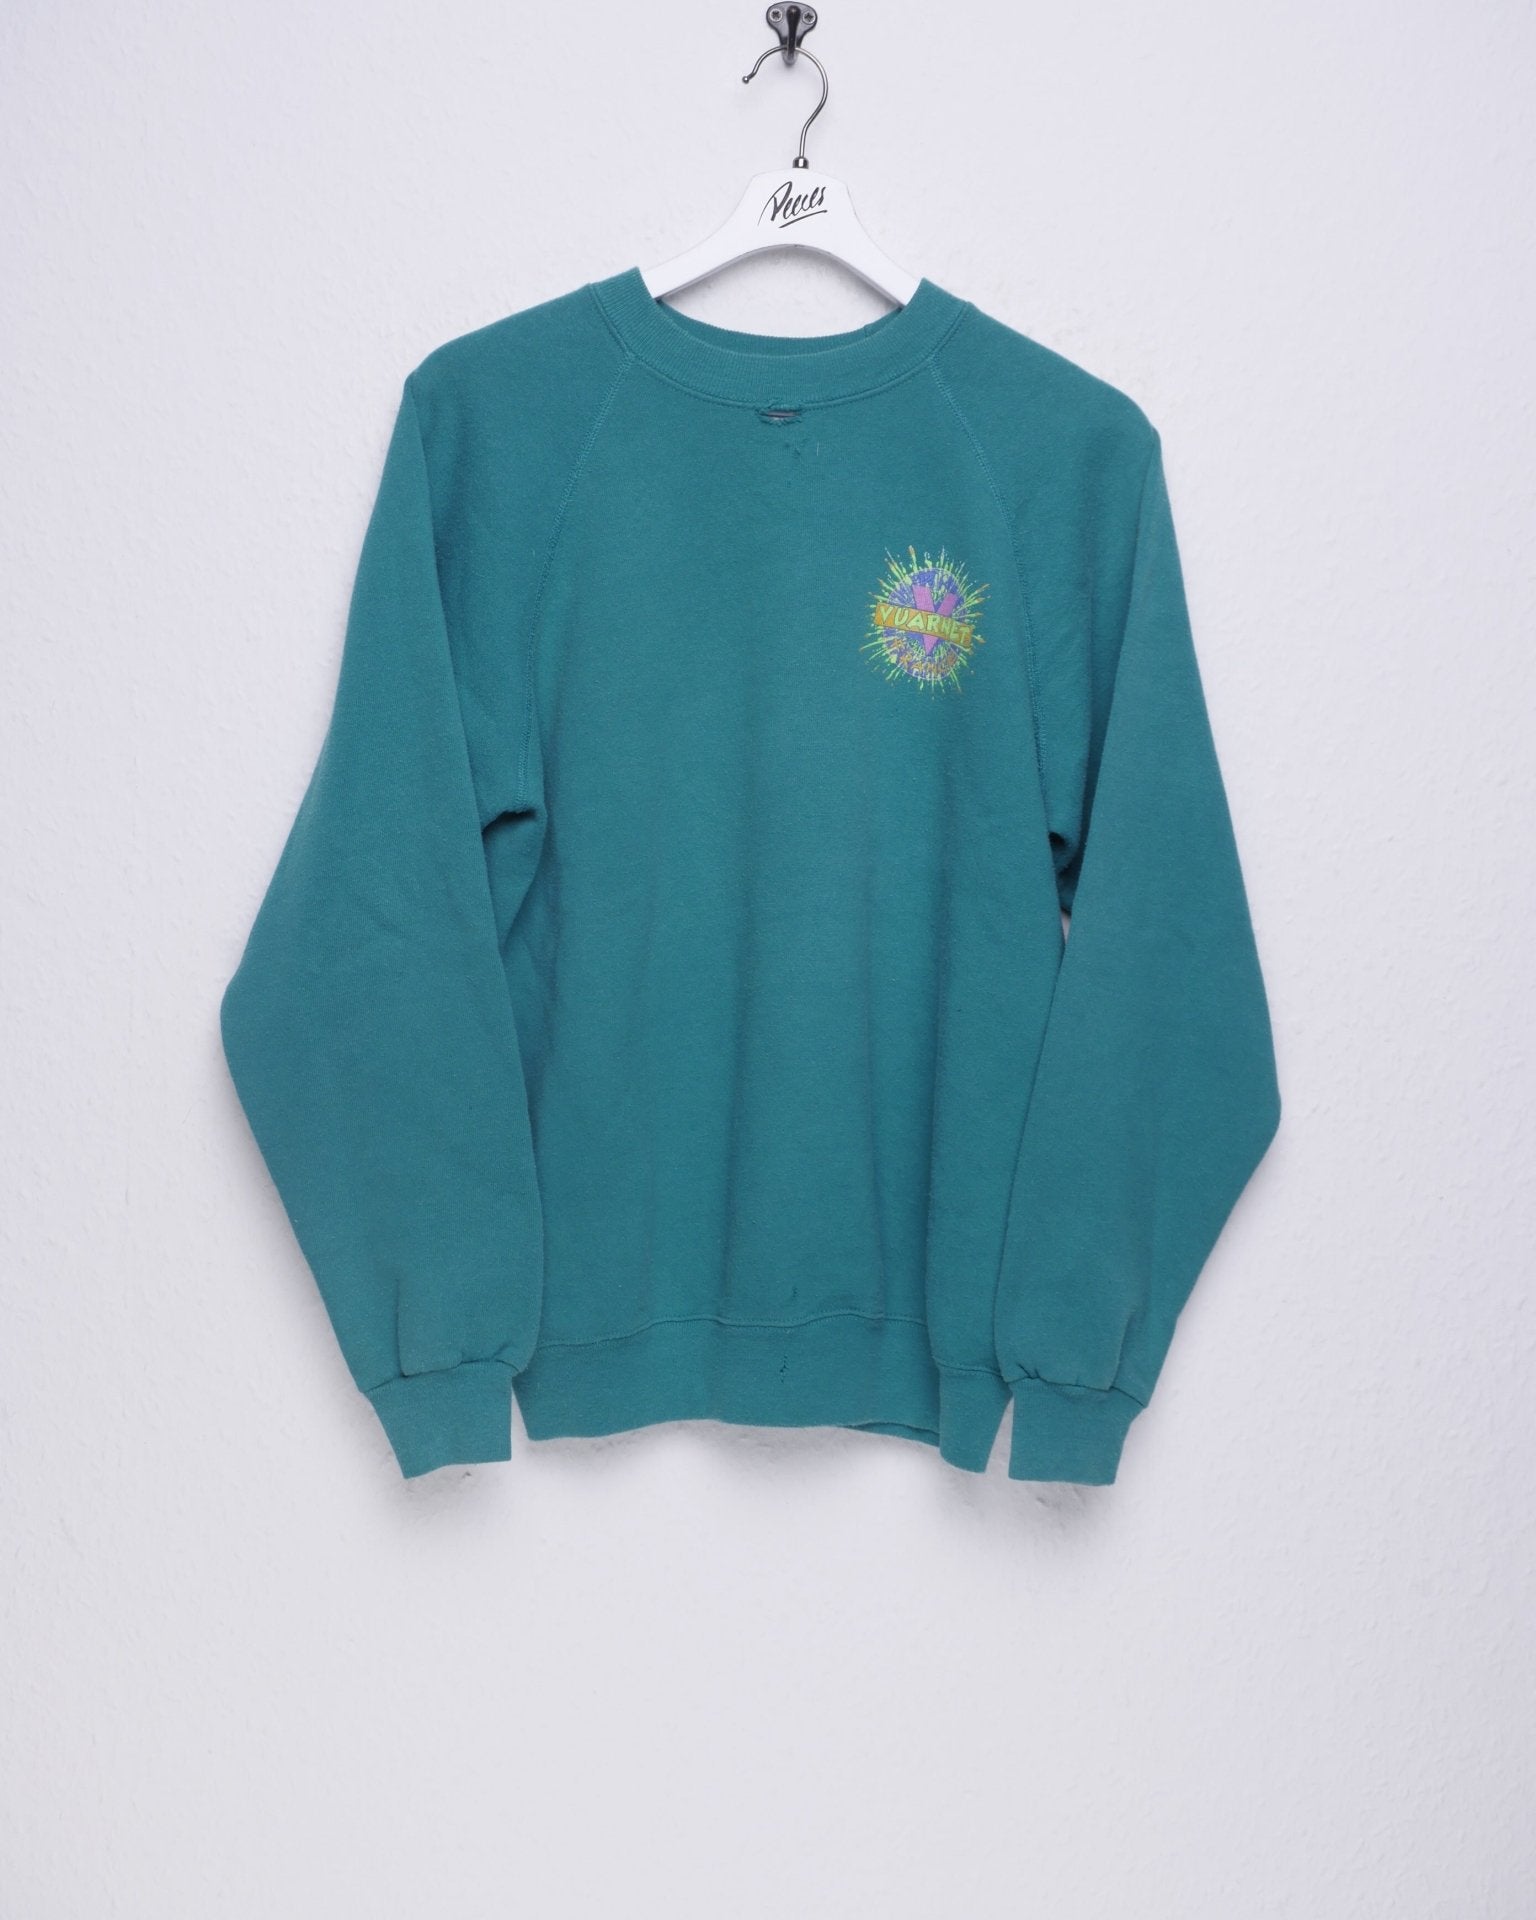 hanes printed Logo 'Vuarnet' turquoise Vintage Sweater - Peeces